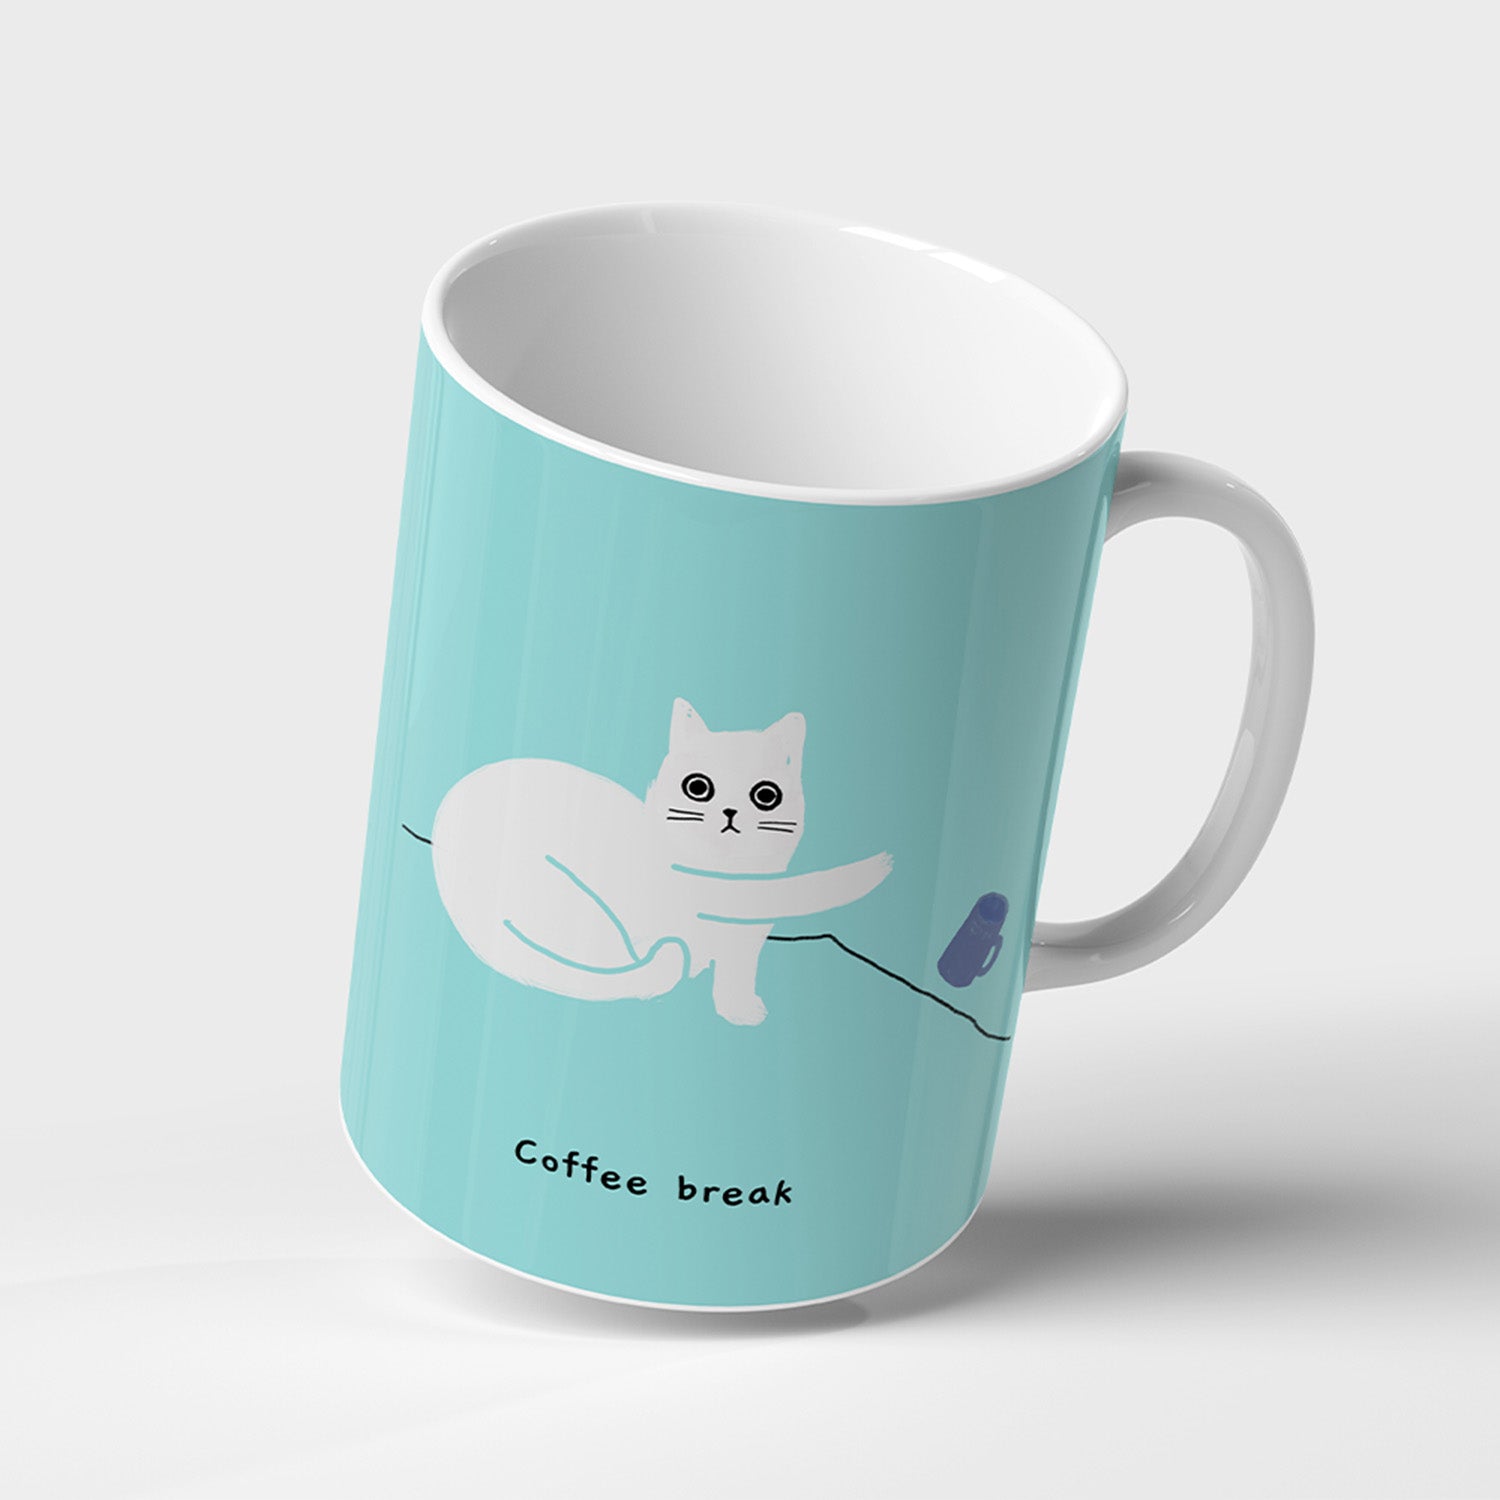 Ken the Cat pushing over mug coffee break blue ceramic mug